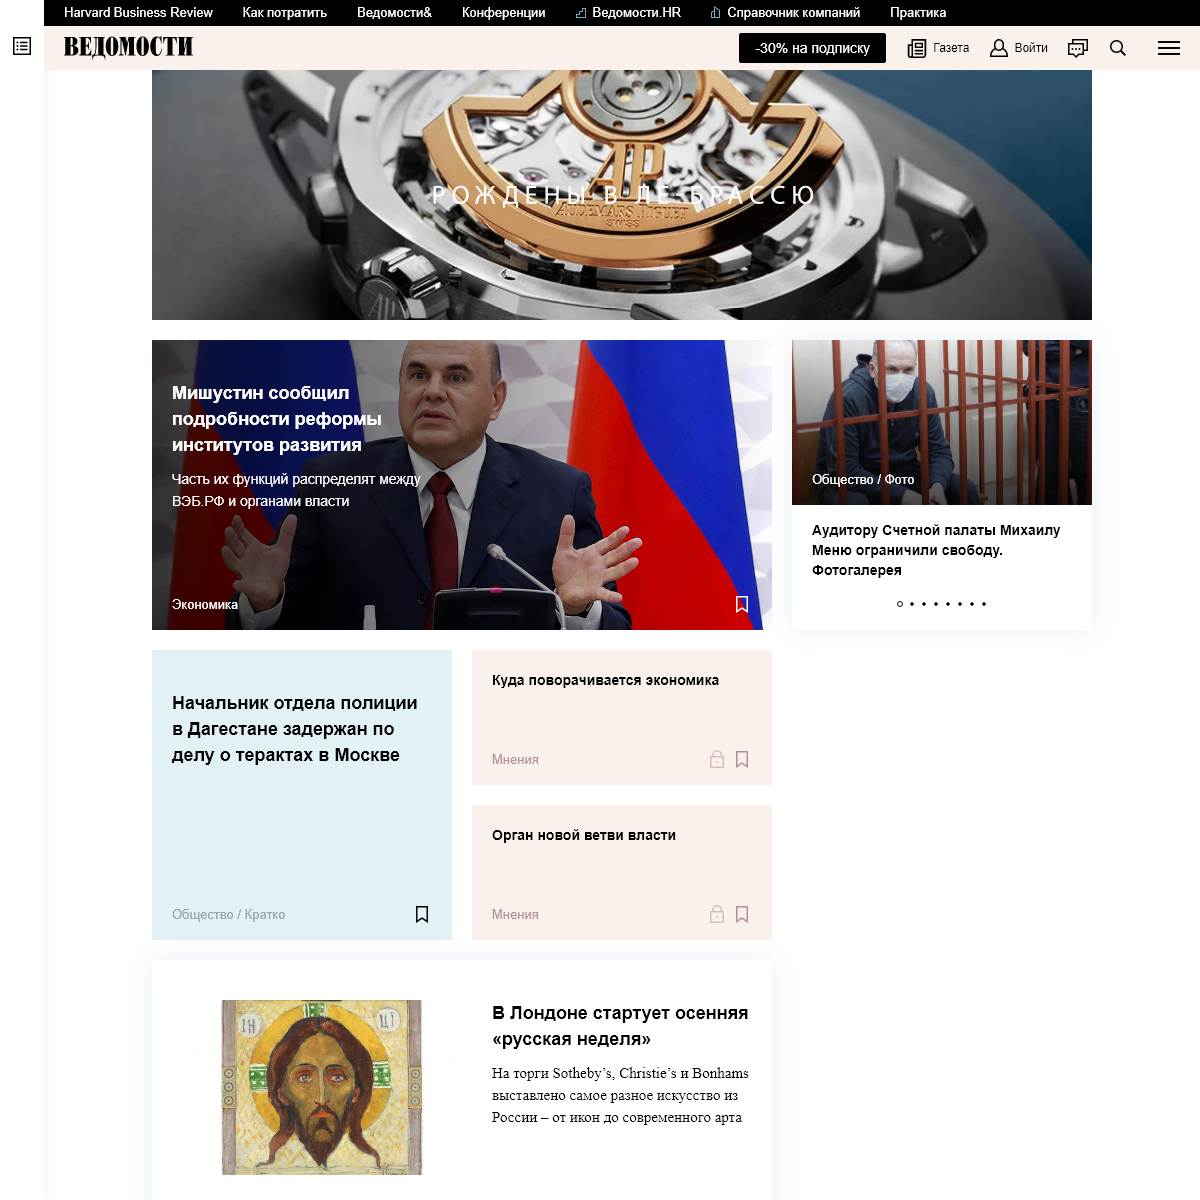 A complete backup of vedomosti.ru